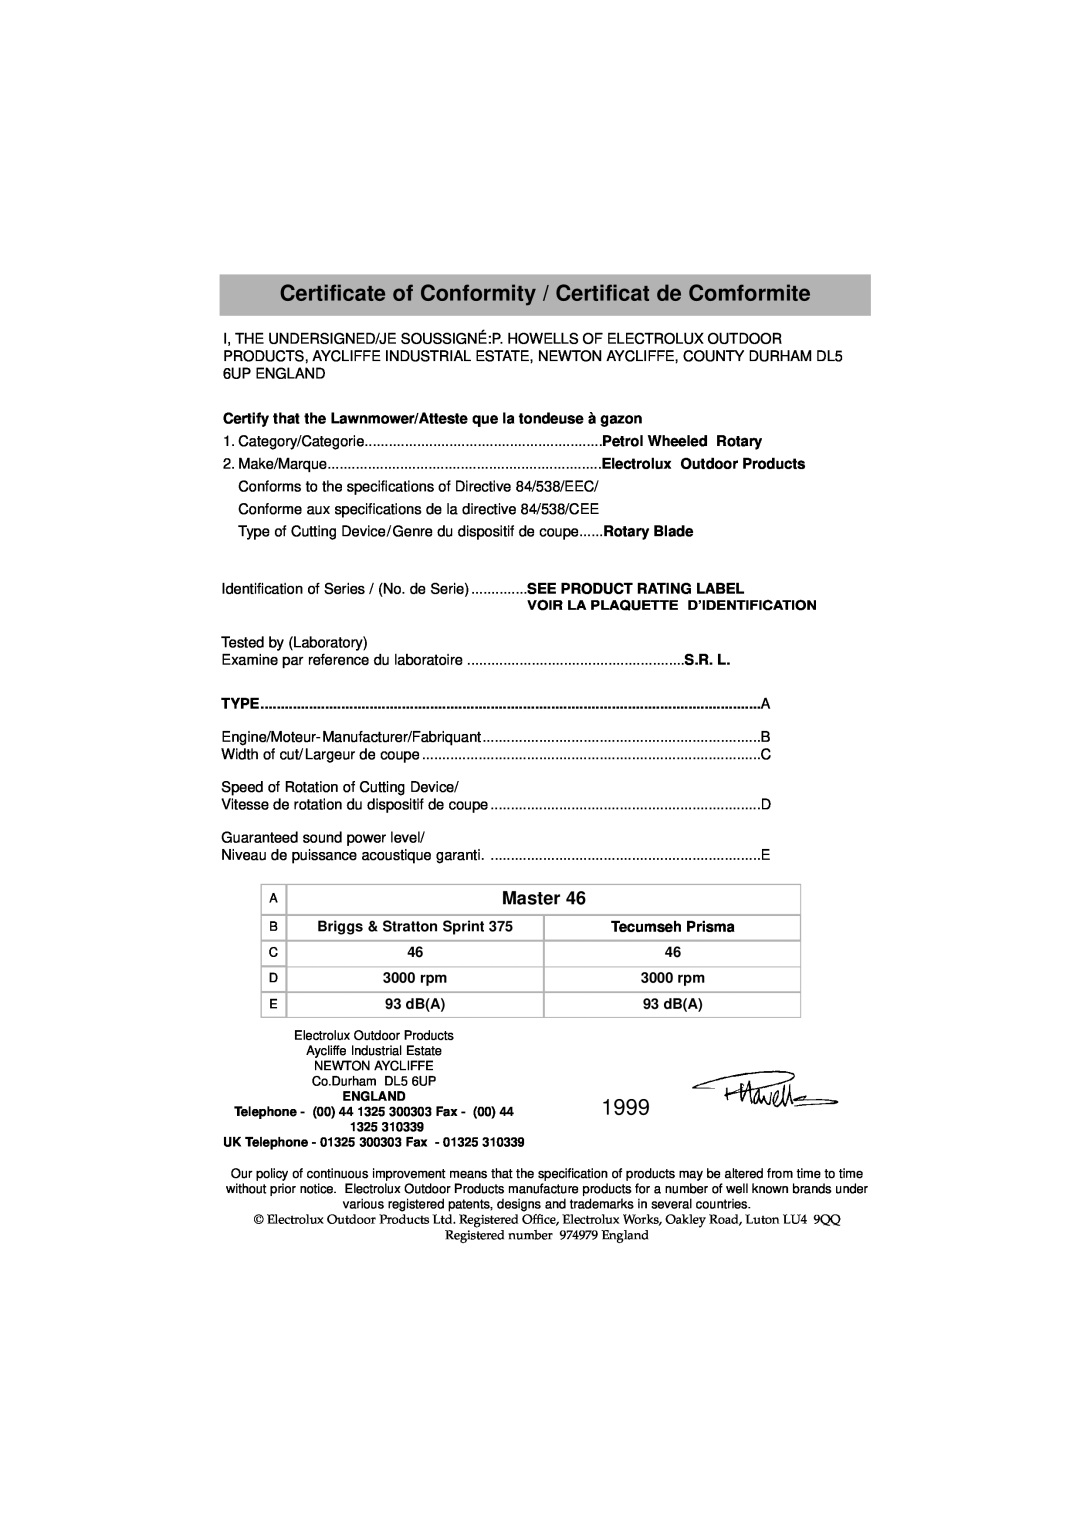 Husqvarna Master 46 manual Certificate of Conformity / Certificat de Comformite, 1999, Petrol Wheeled Rotary, Rotary Blade 